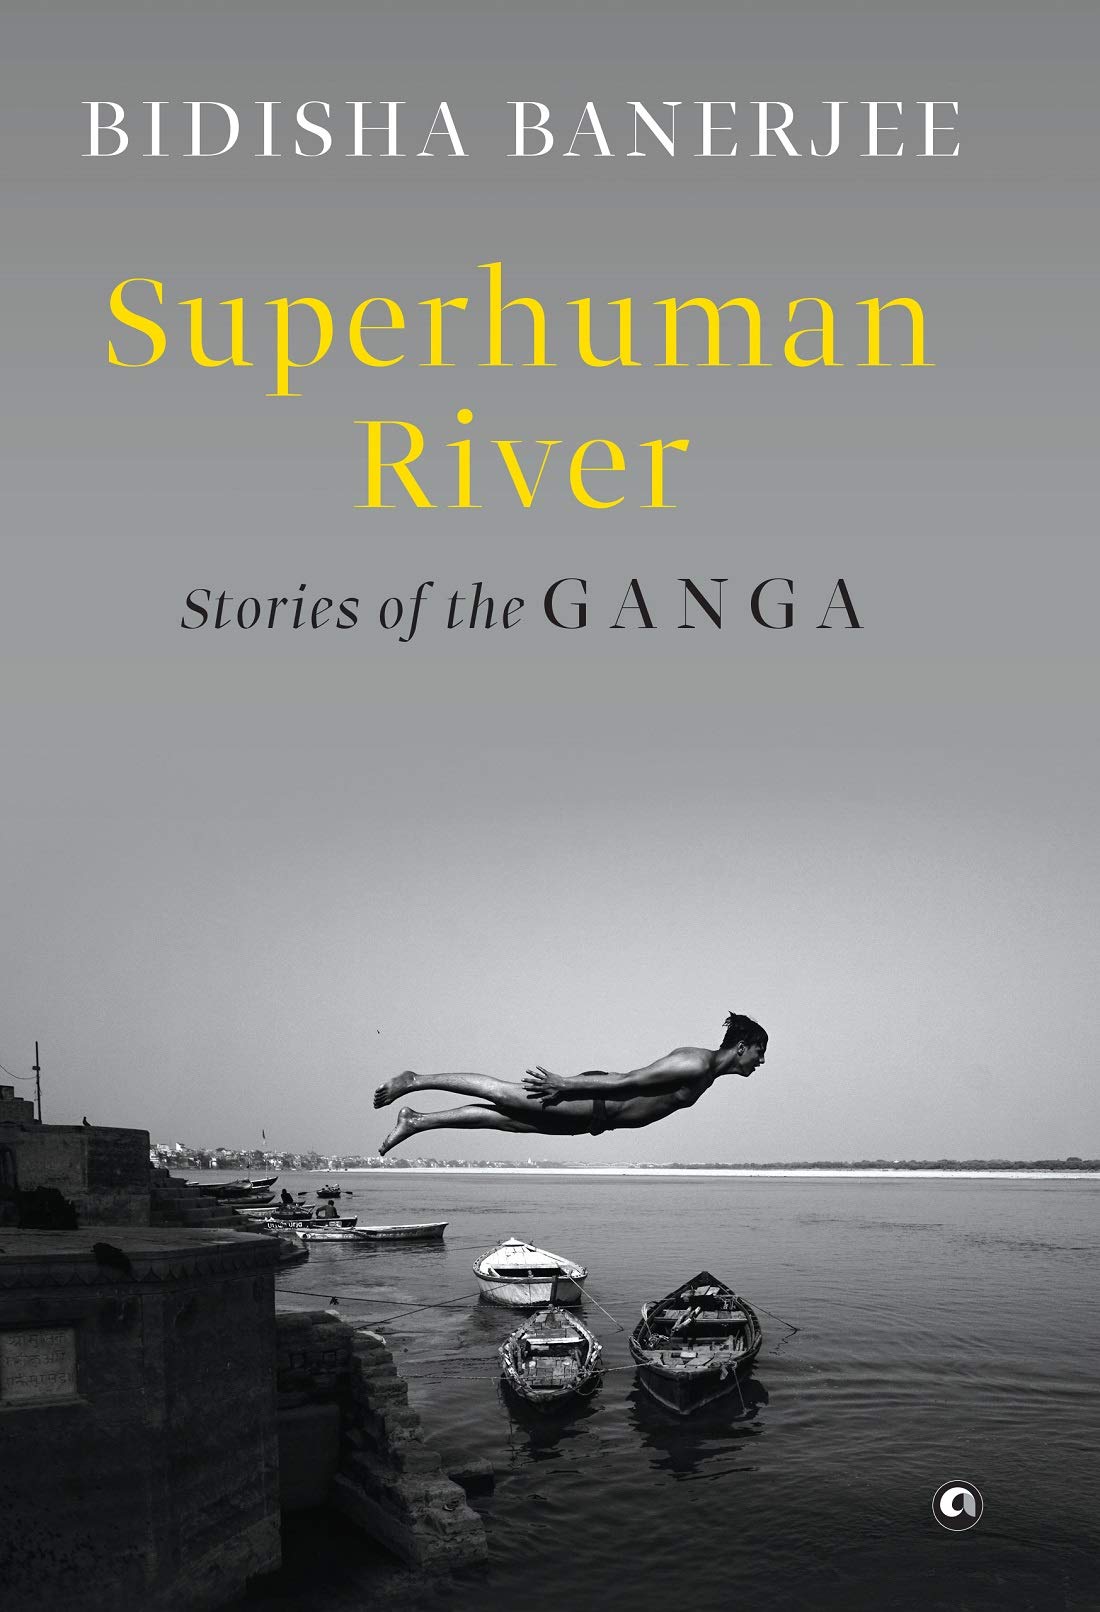 Stories of the Ganga: Chronicles from the Kumbh Mela at Prayag